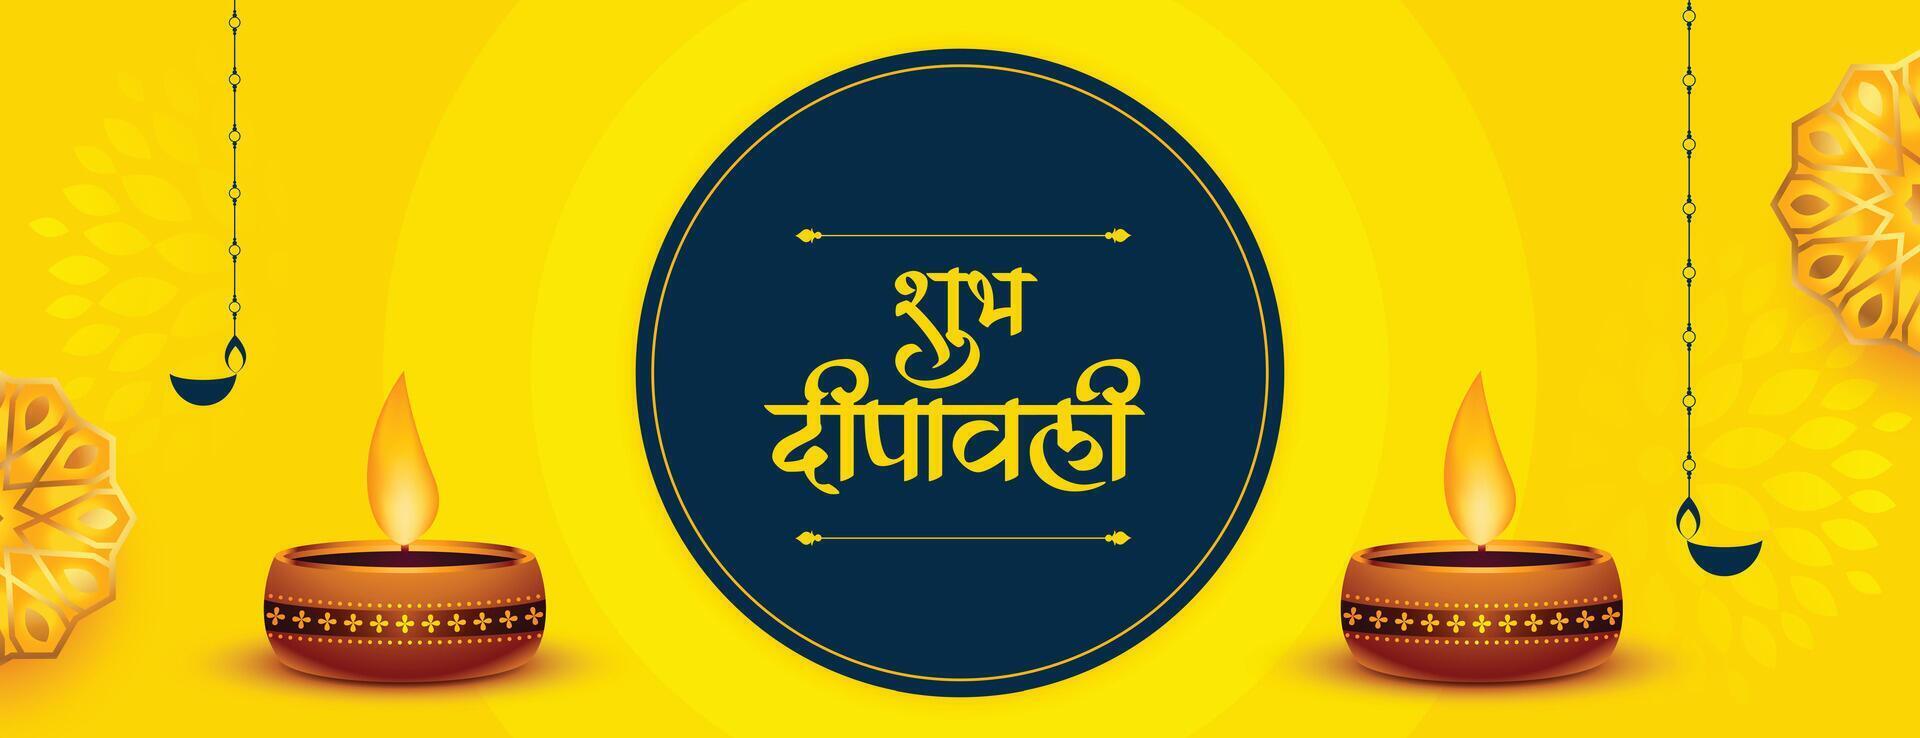 shubh Deepavali giallo bandiera con raggiante diya design vettore